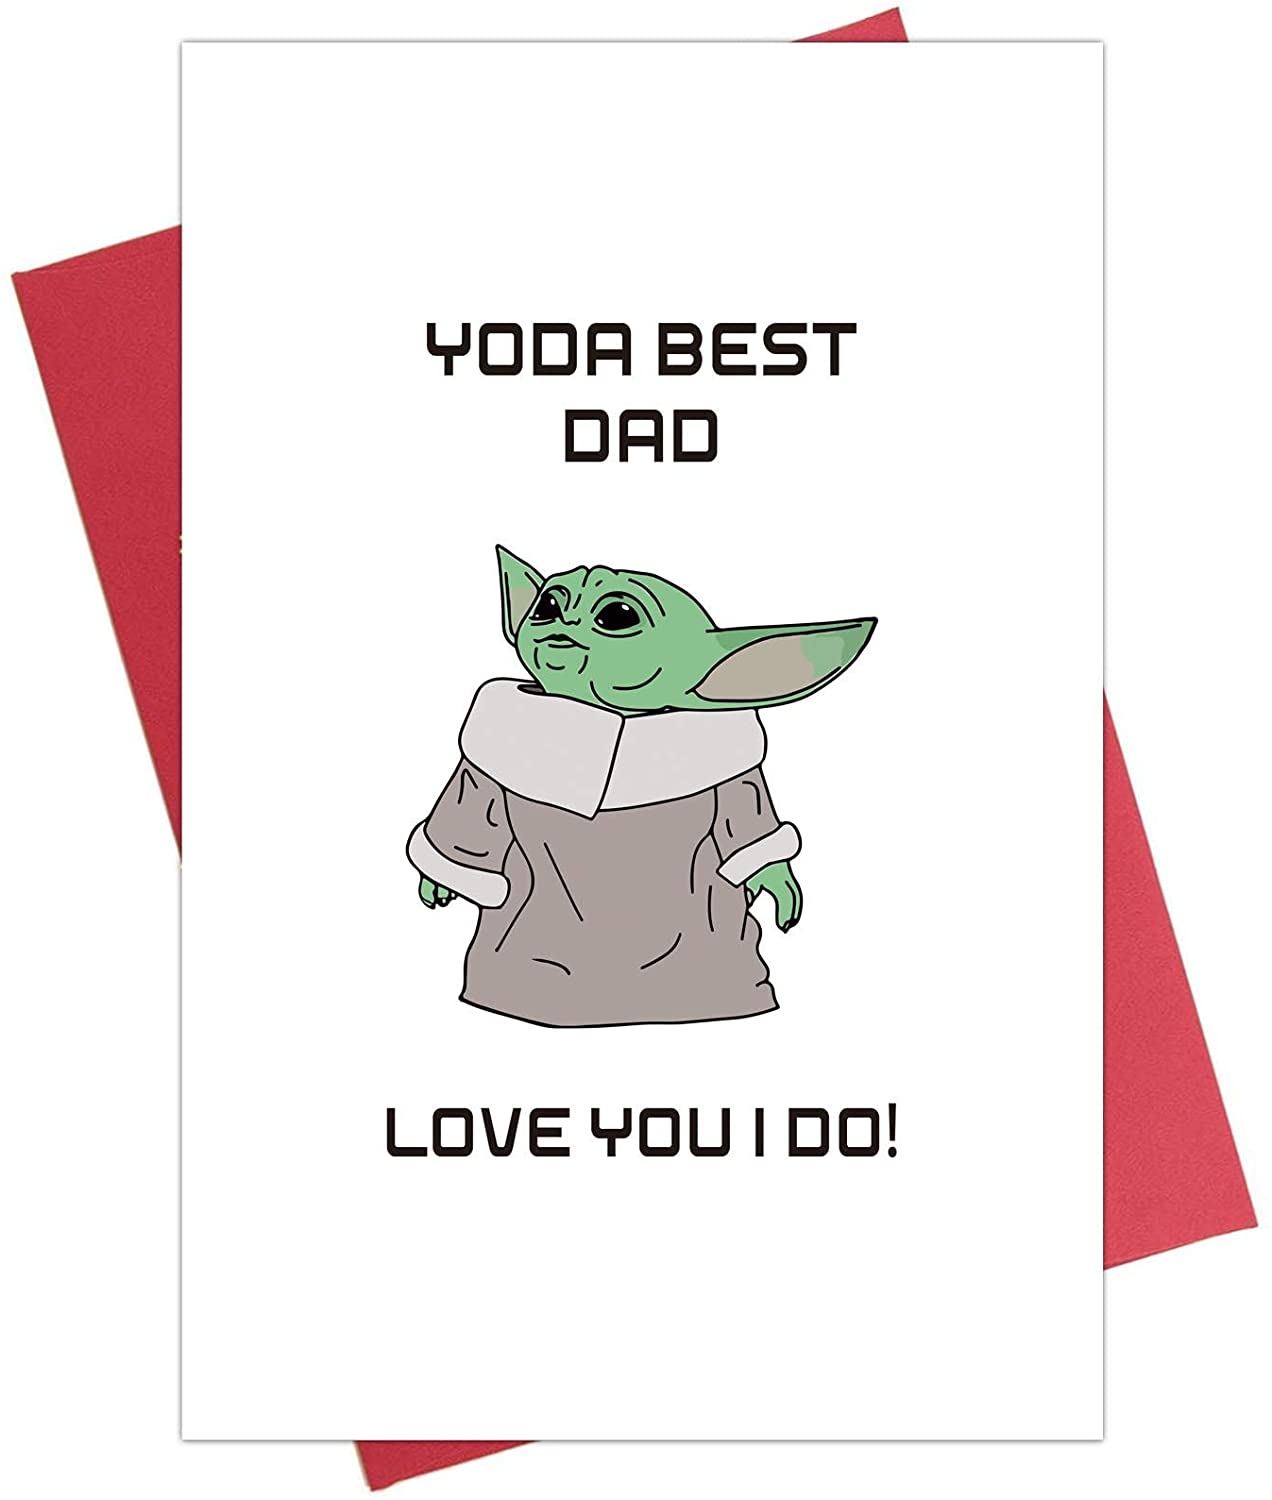 Baby Yoda Birthday Card for Father, Star Wars Birthday Card for Dad, Yoda Best Dad, Father's Day Card